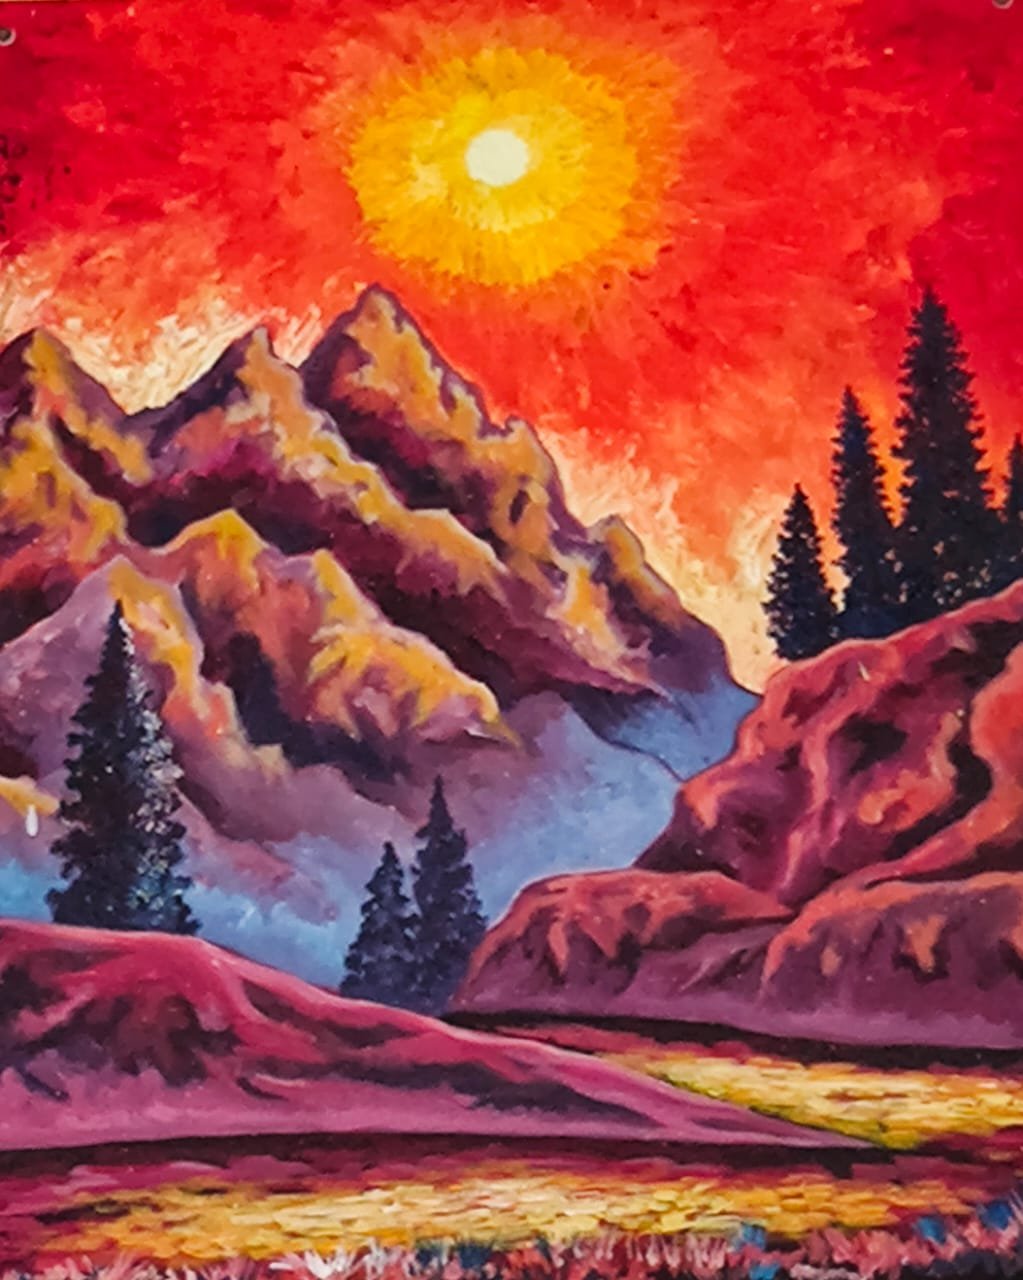 Mountain Sunrise View Painting - Necessity eStore - Order Now!